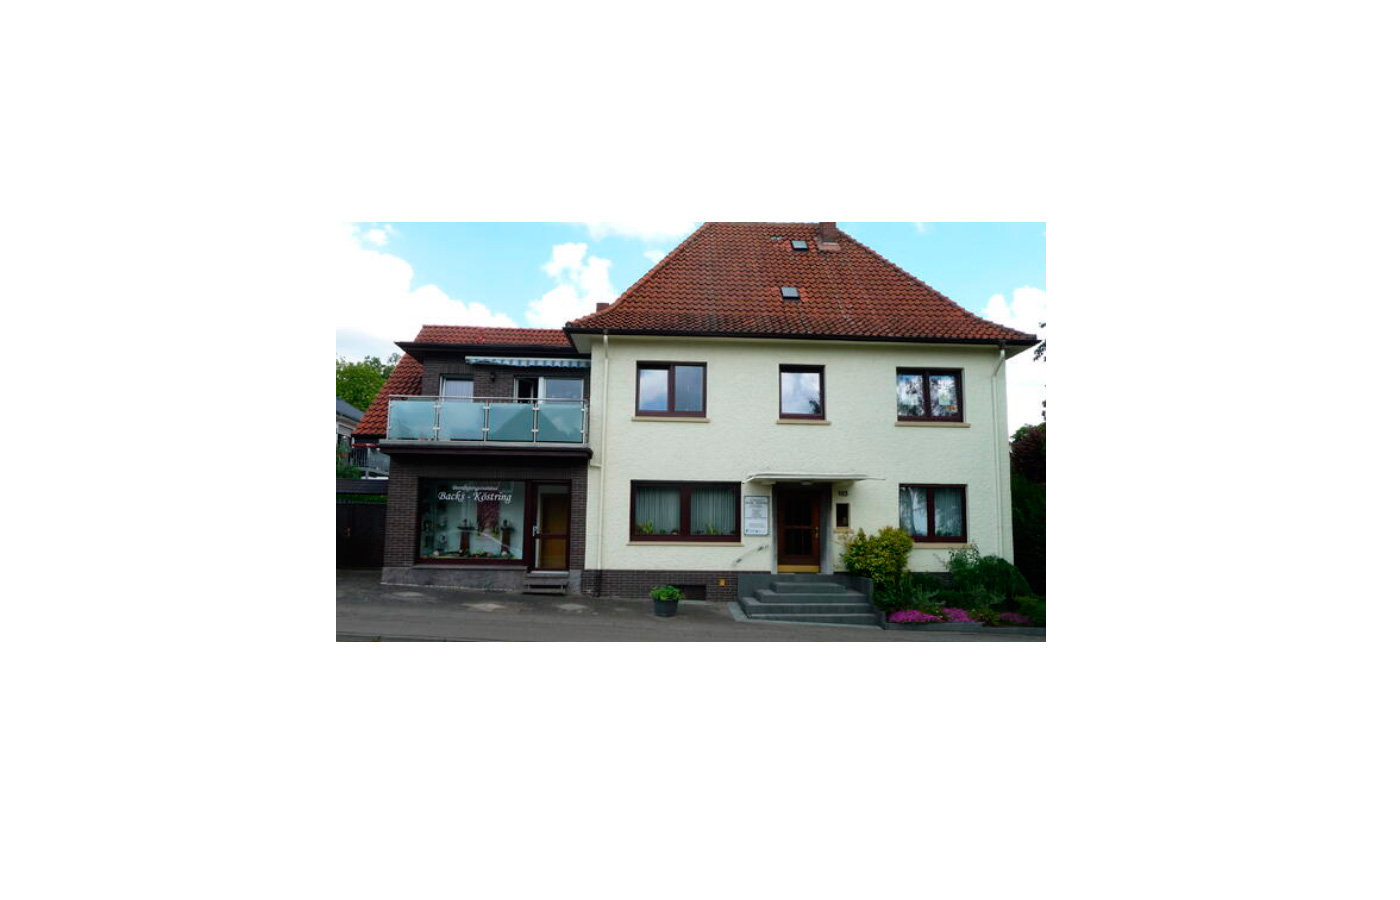 Bild 2 Beerdingungsinstitut Backs-Köstring in Bad Oeynhausen